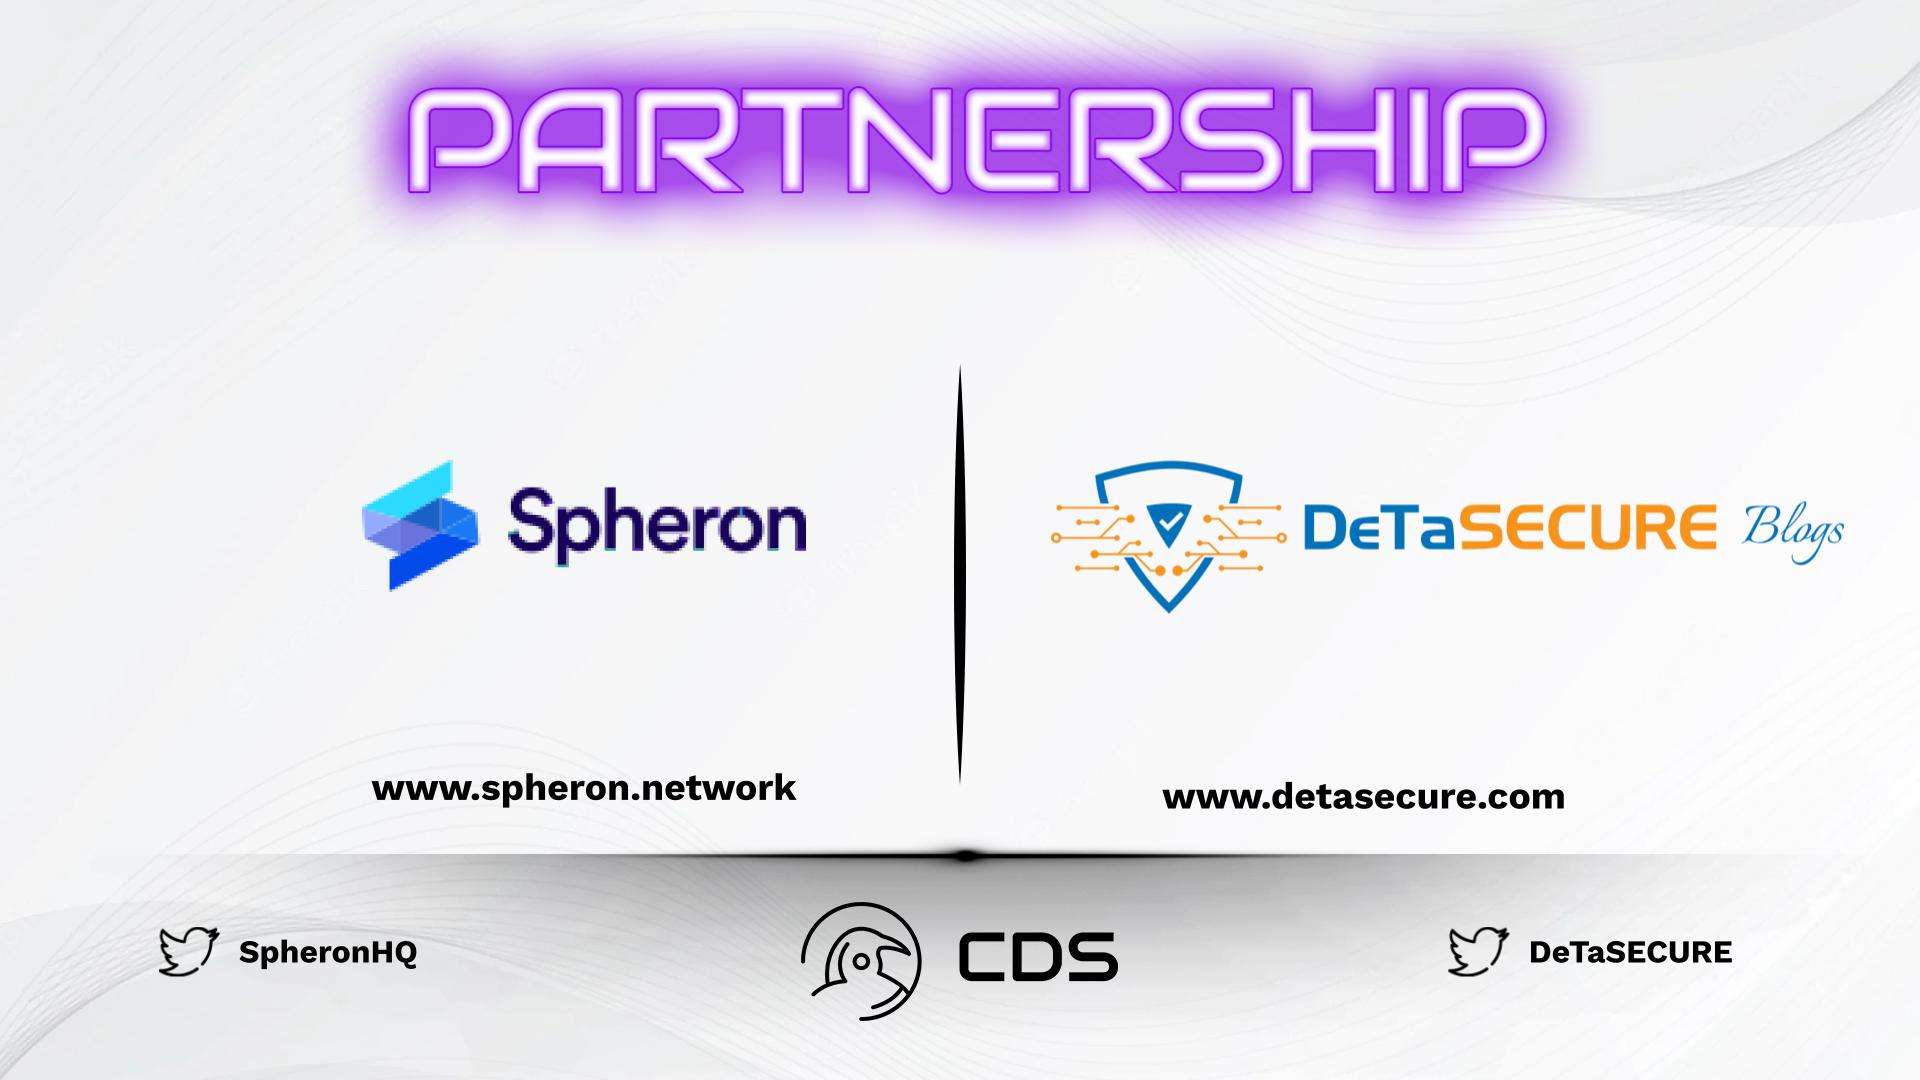 Spheron Partnership with DeTaSECURE